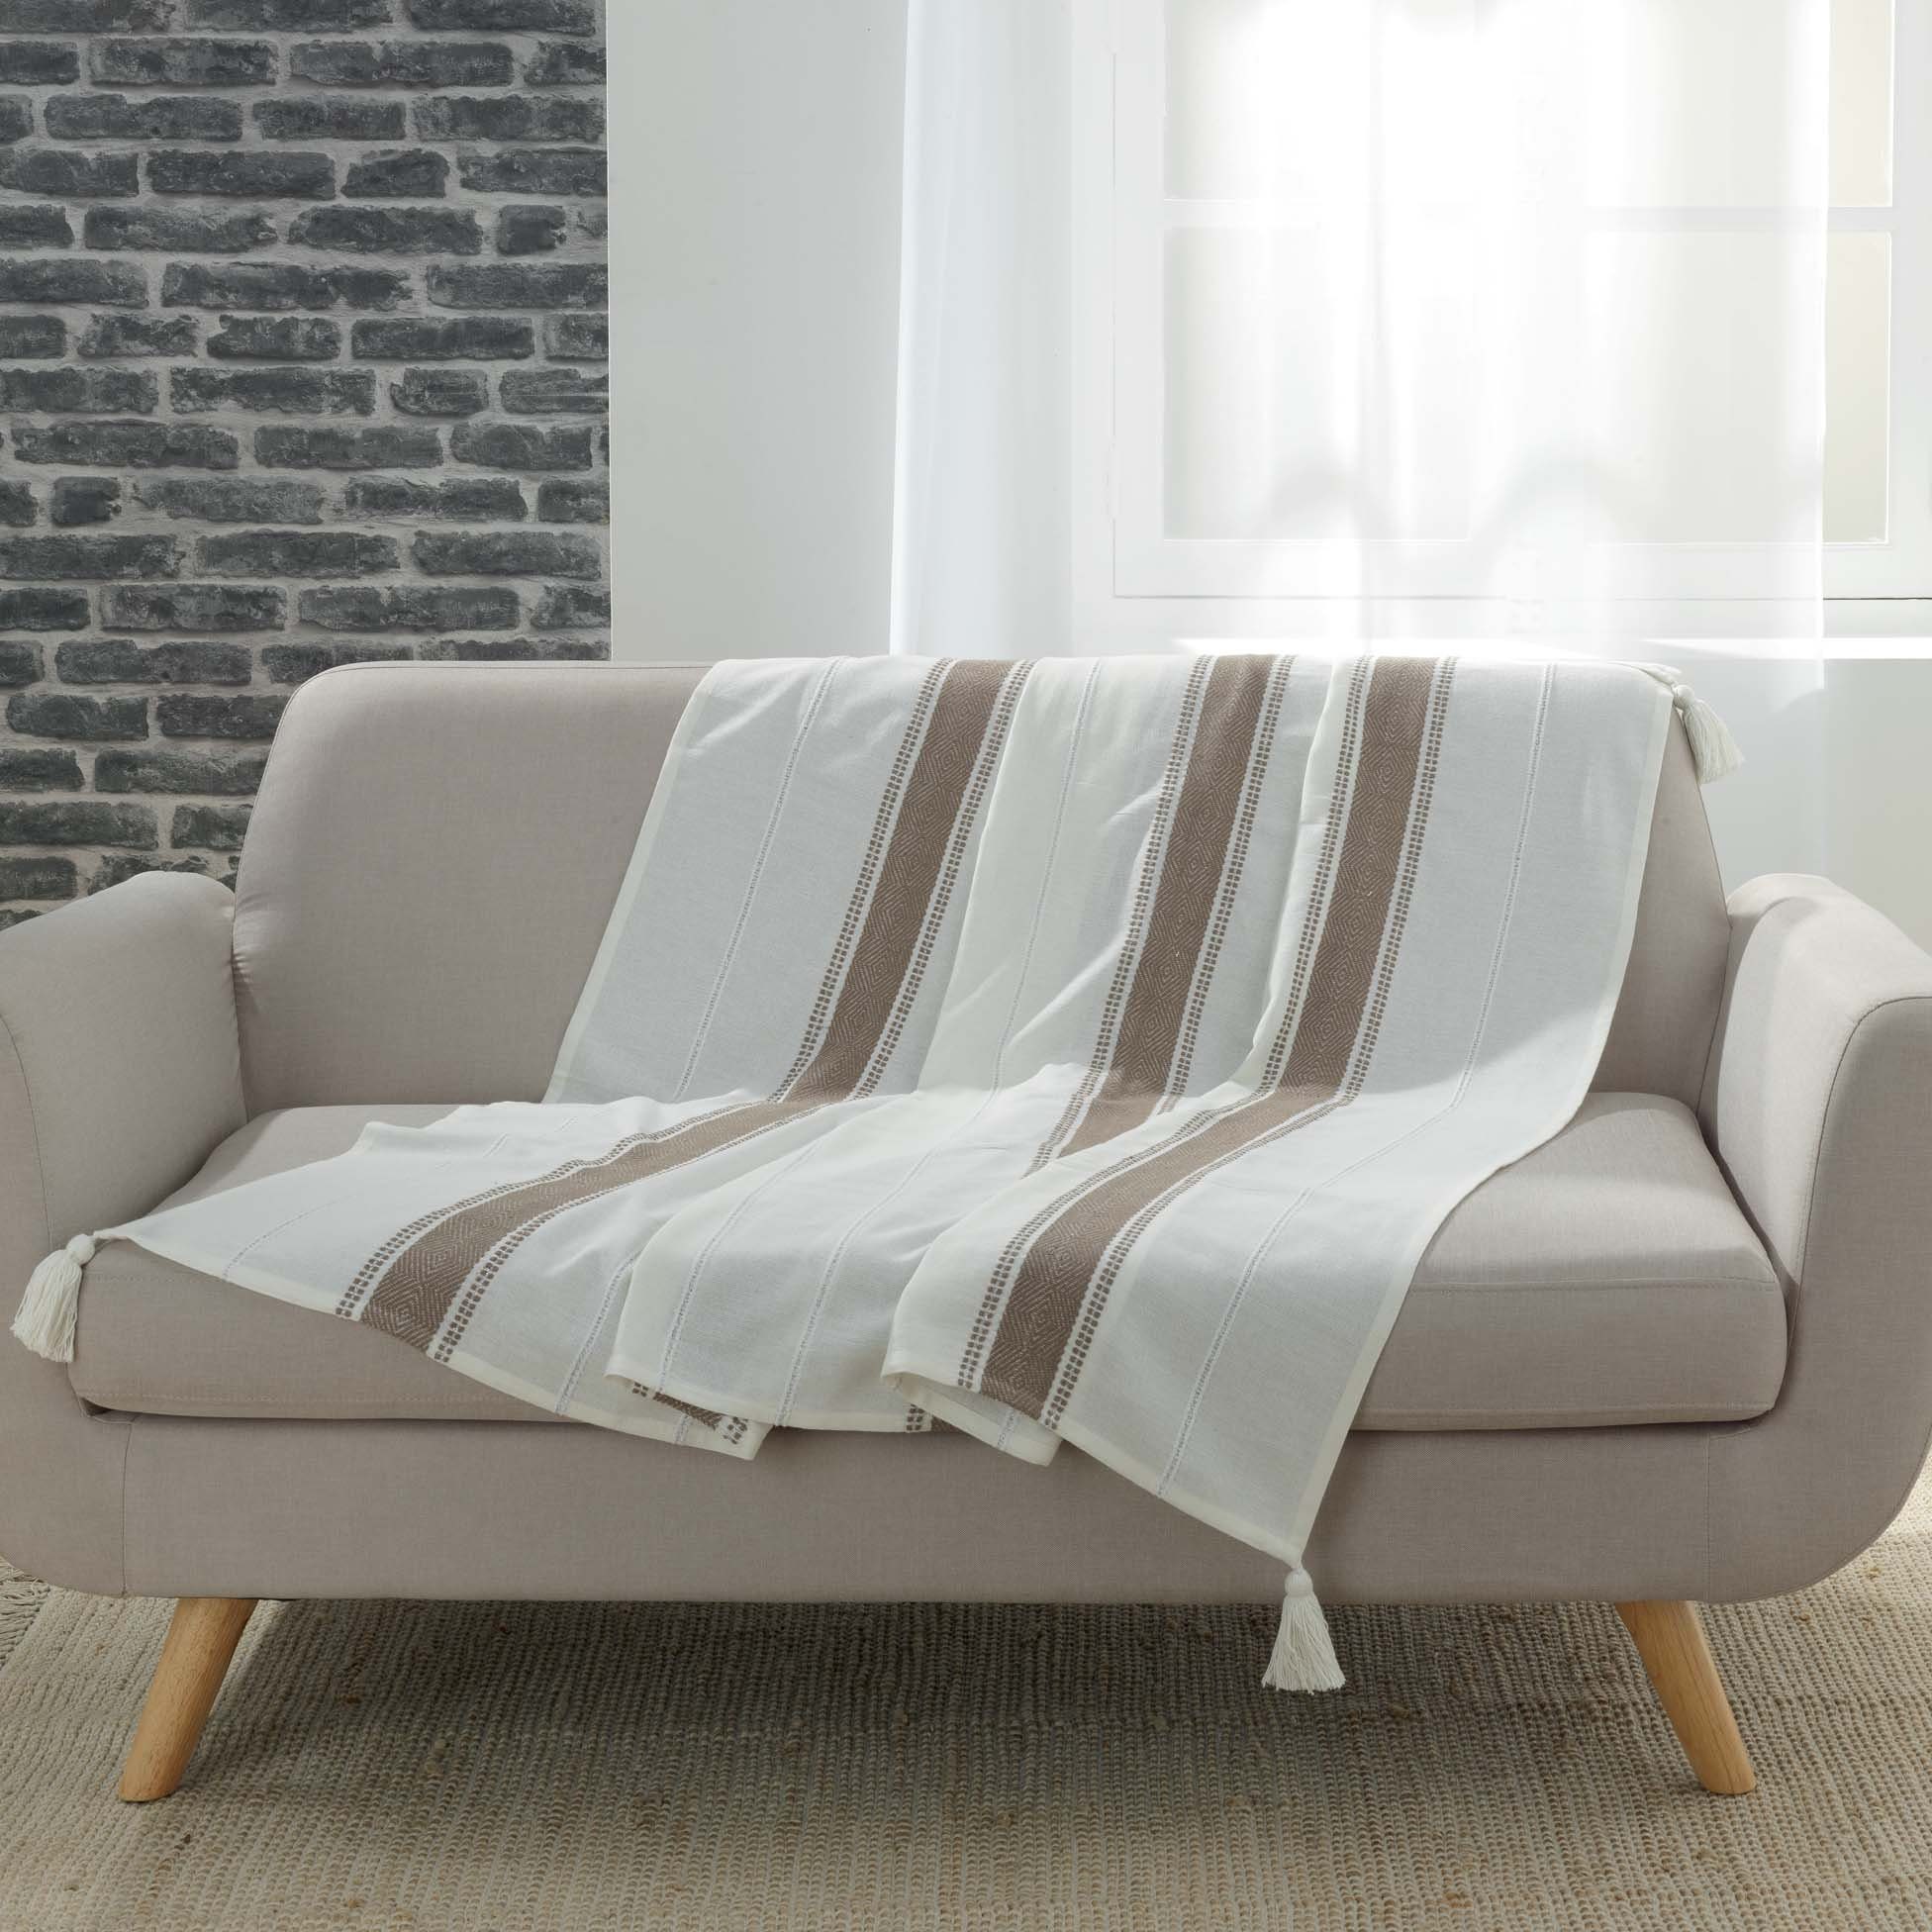 Tagesdecke, dynamic24, Wohndecke Sofa Couch 125x150 Baumwolle Decke Kuscheldecke Überwurf